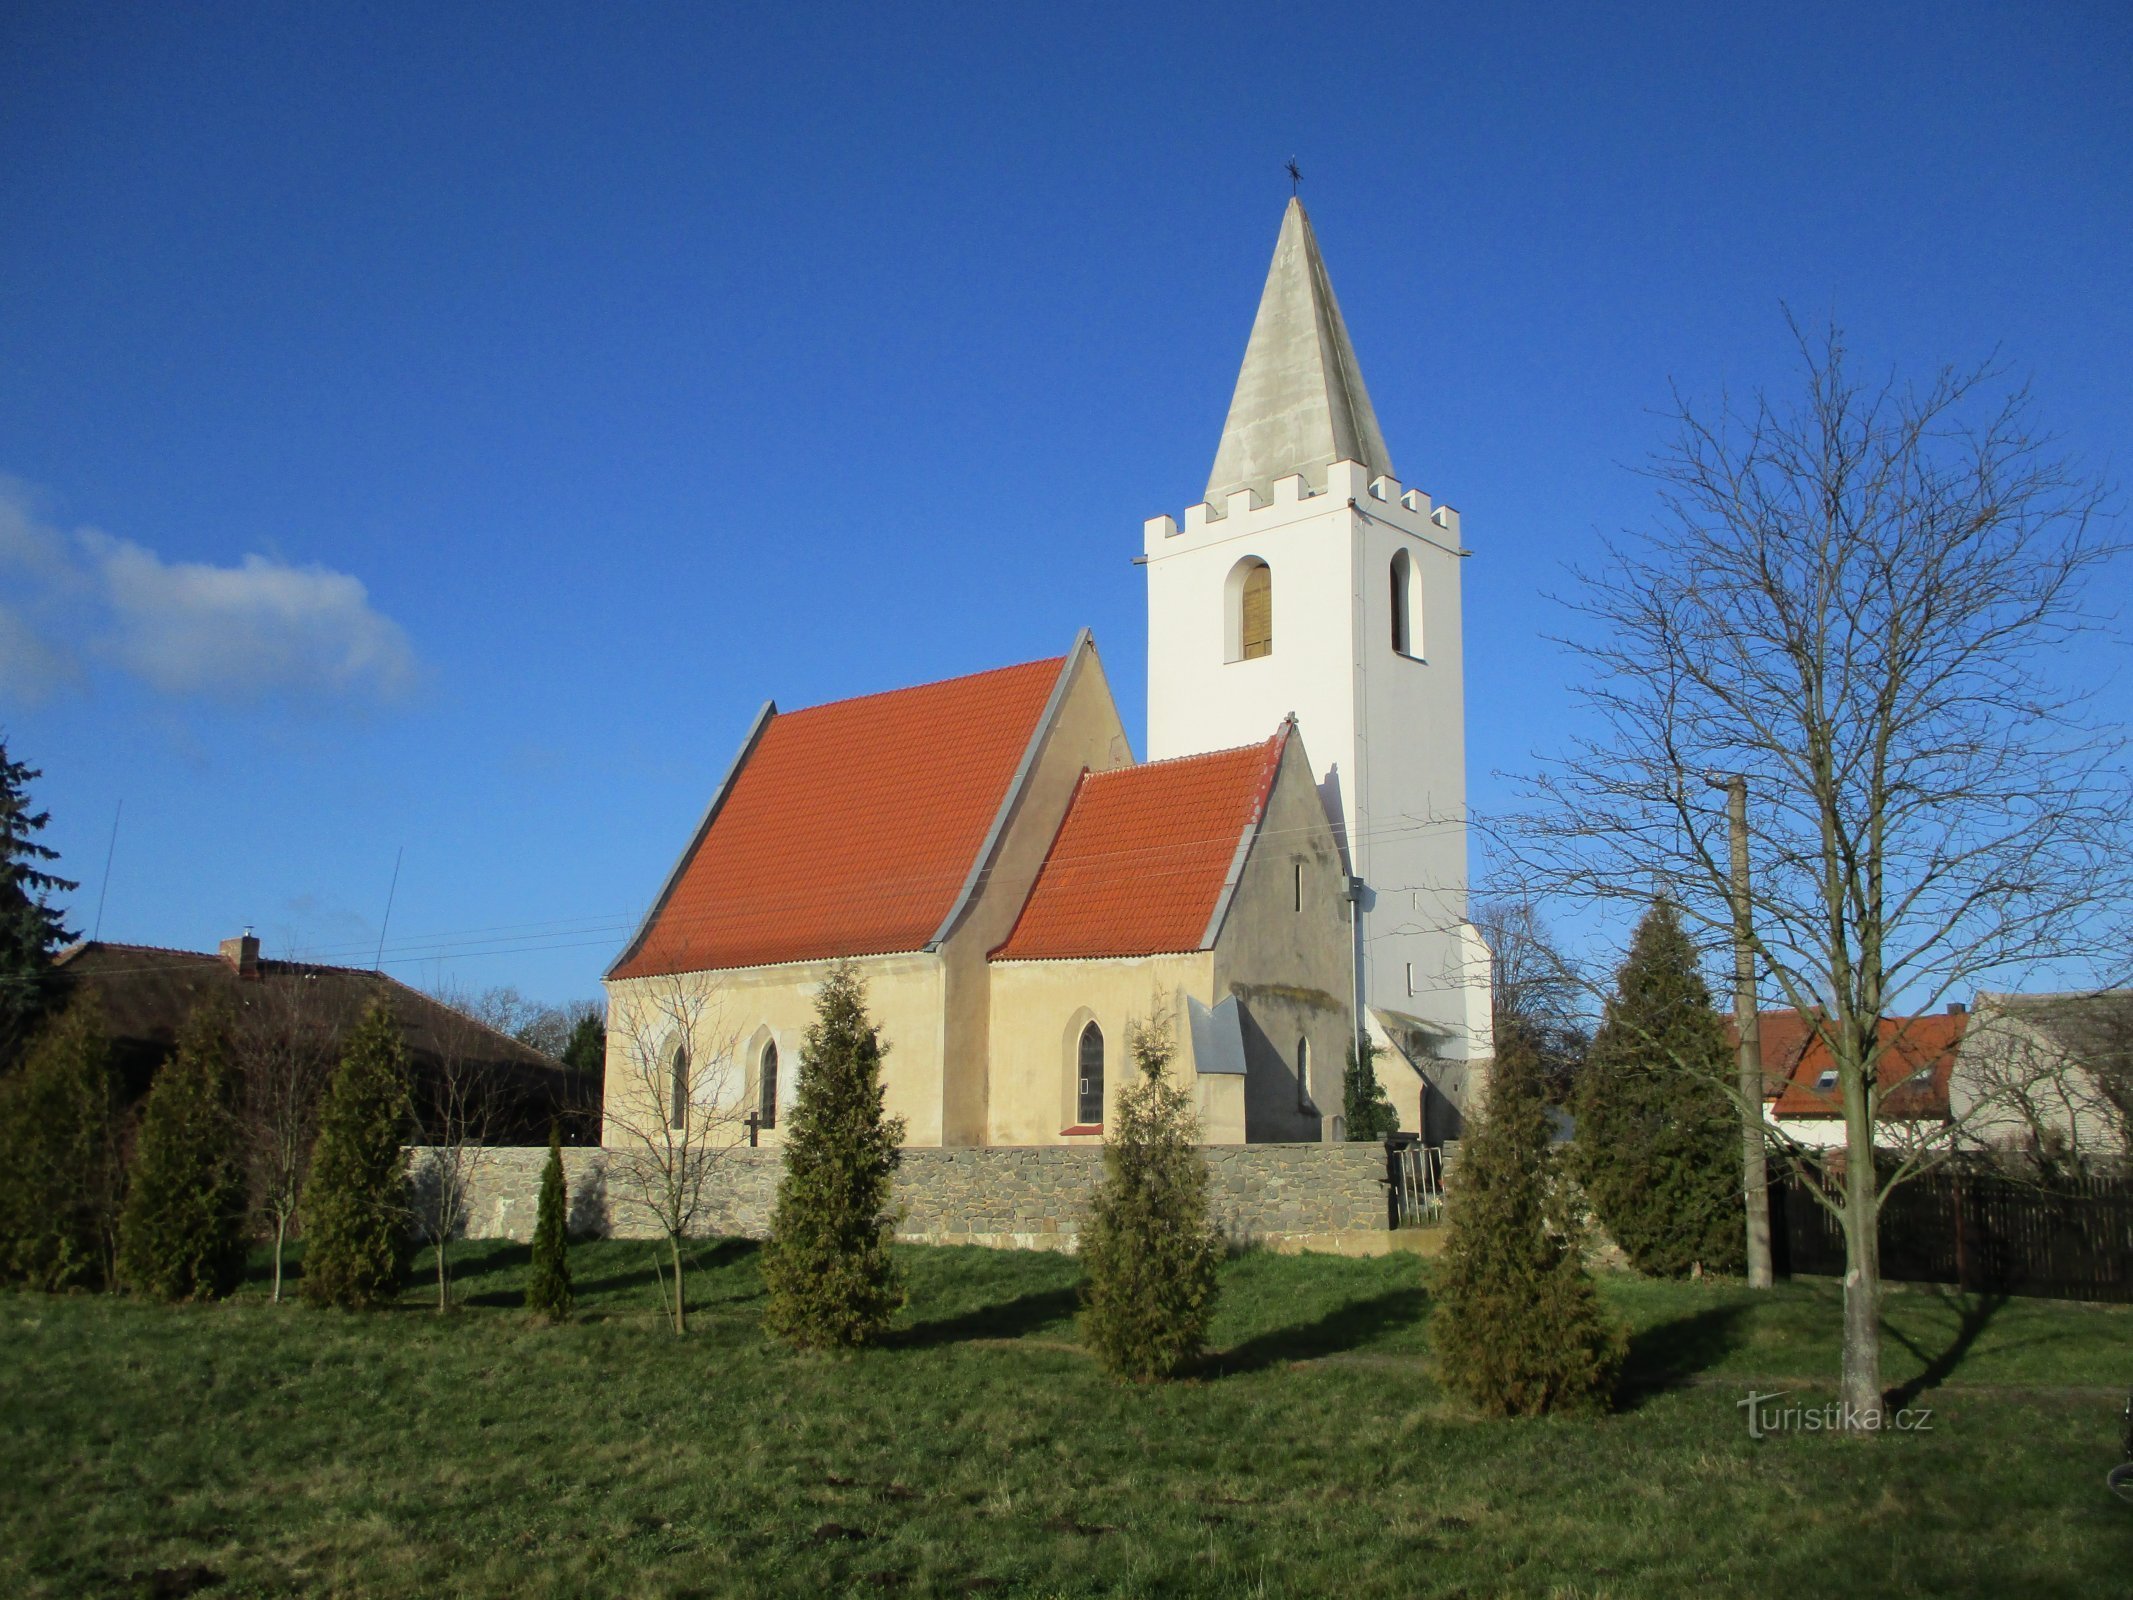 Церква св. Вацлав (Staré Ždánice)